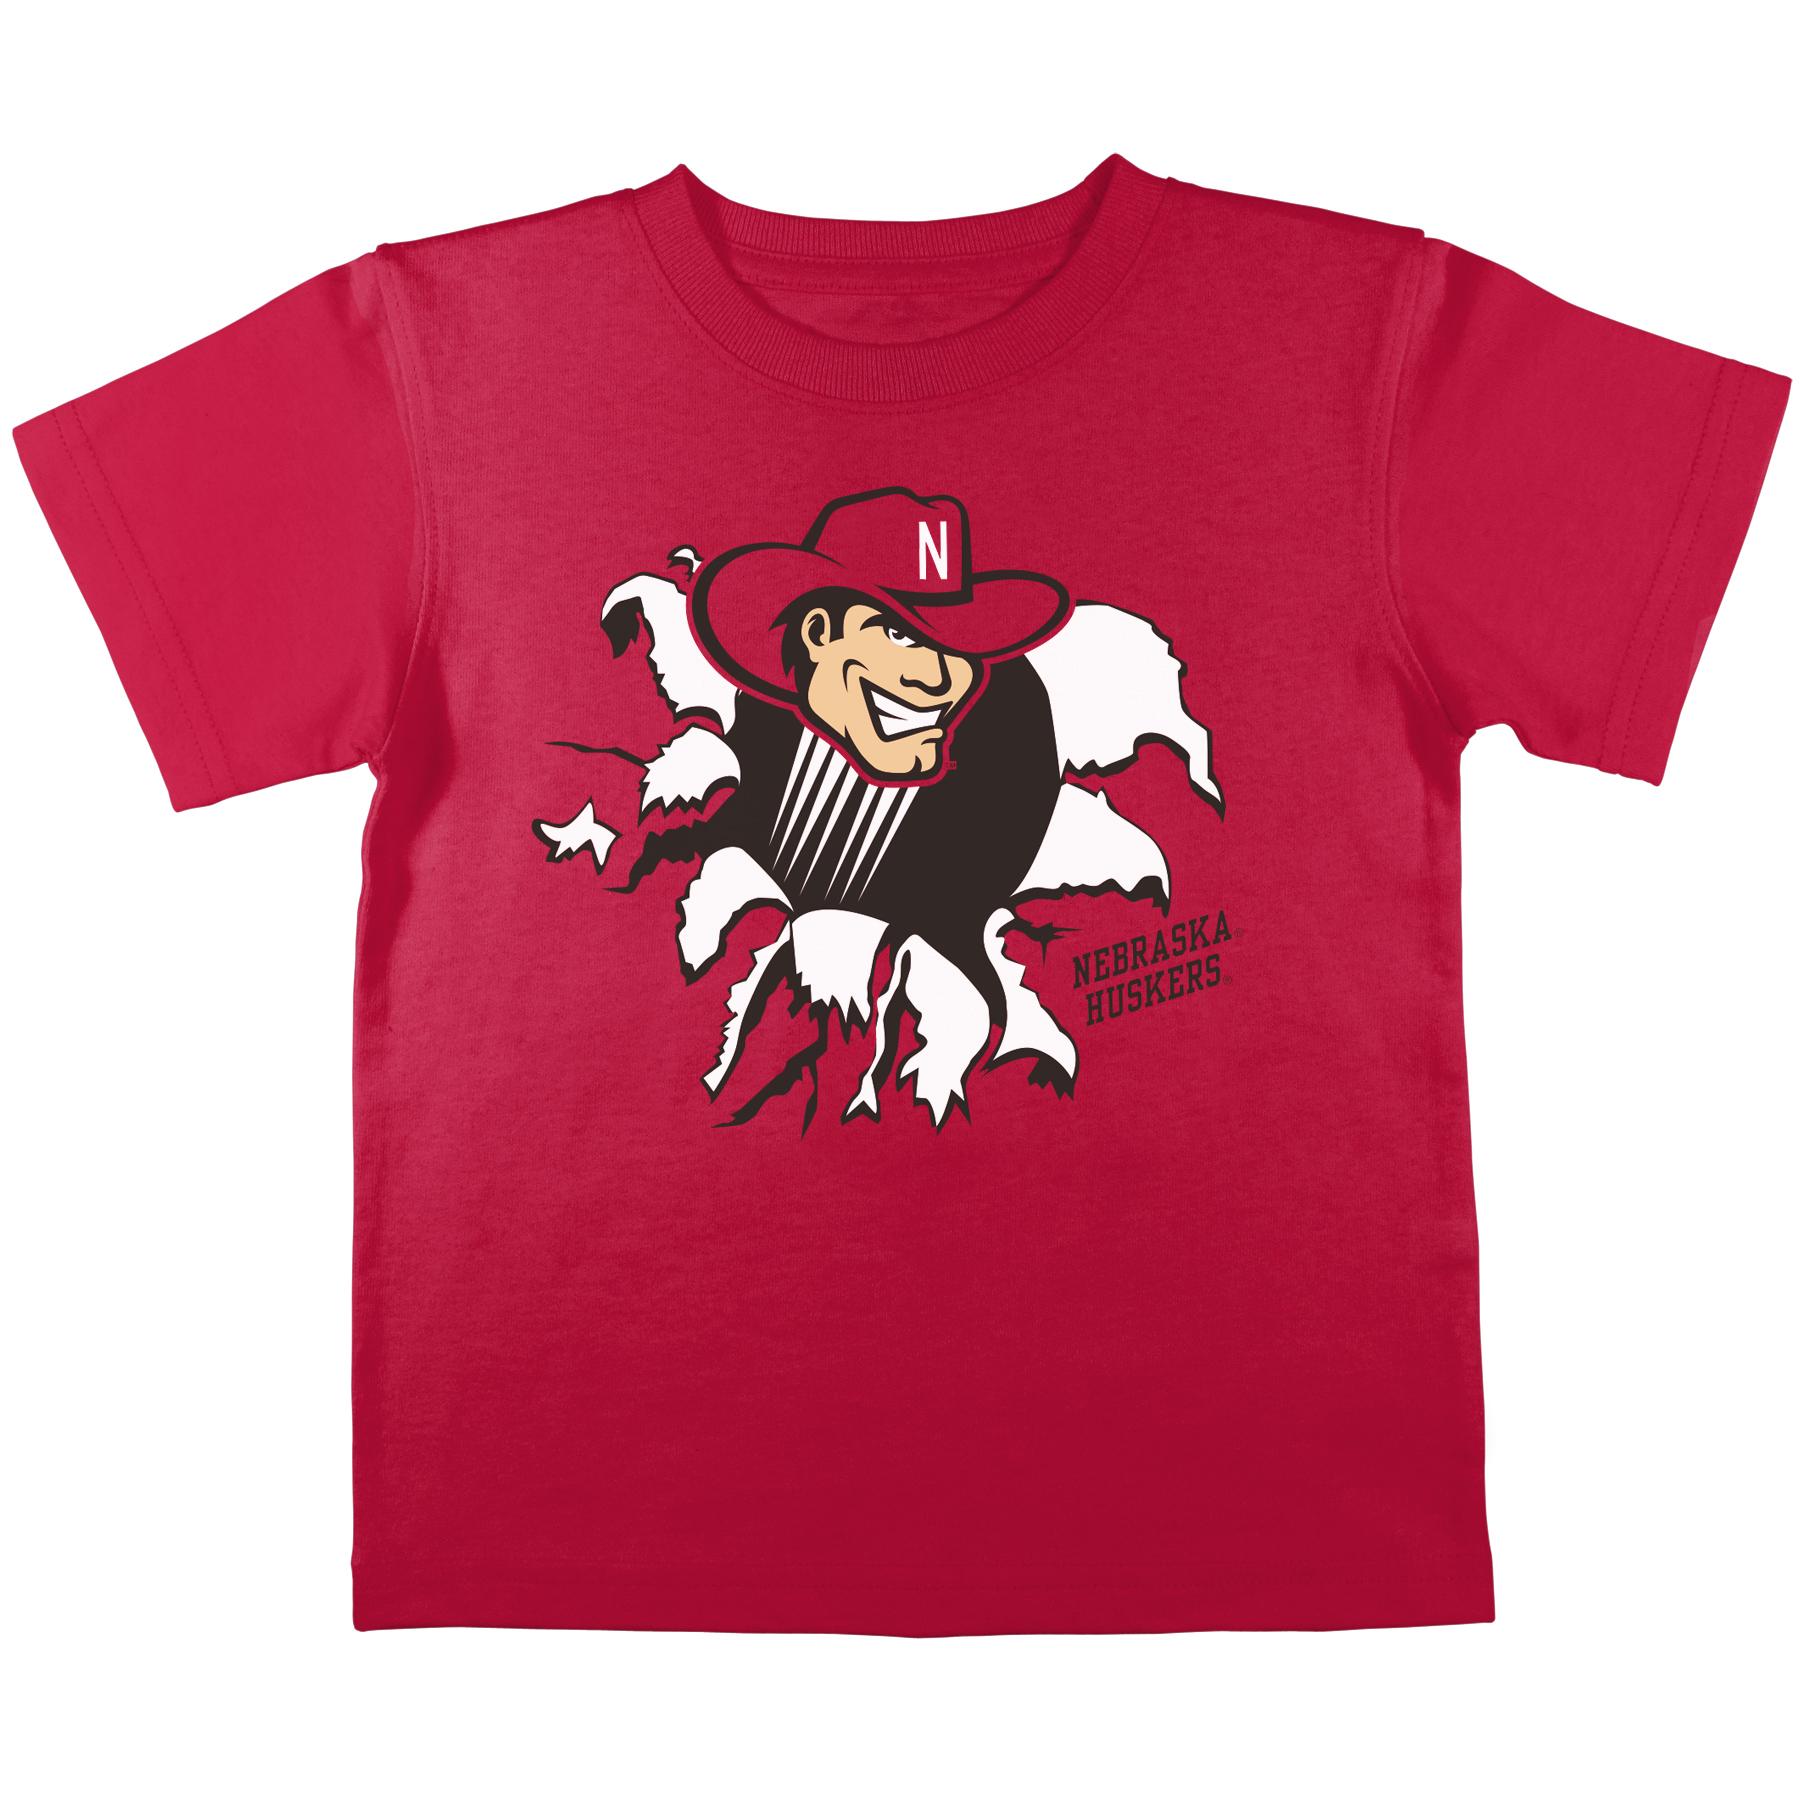 NCAA Toddler Boy's T-Shirt - University of Nebraska Cornhuskers